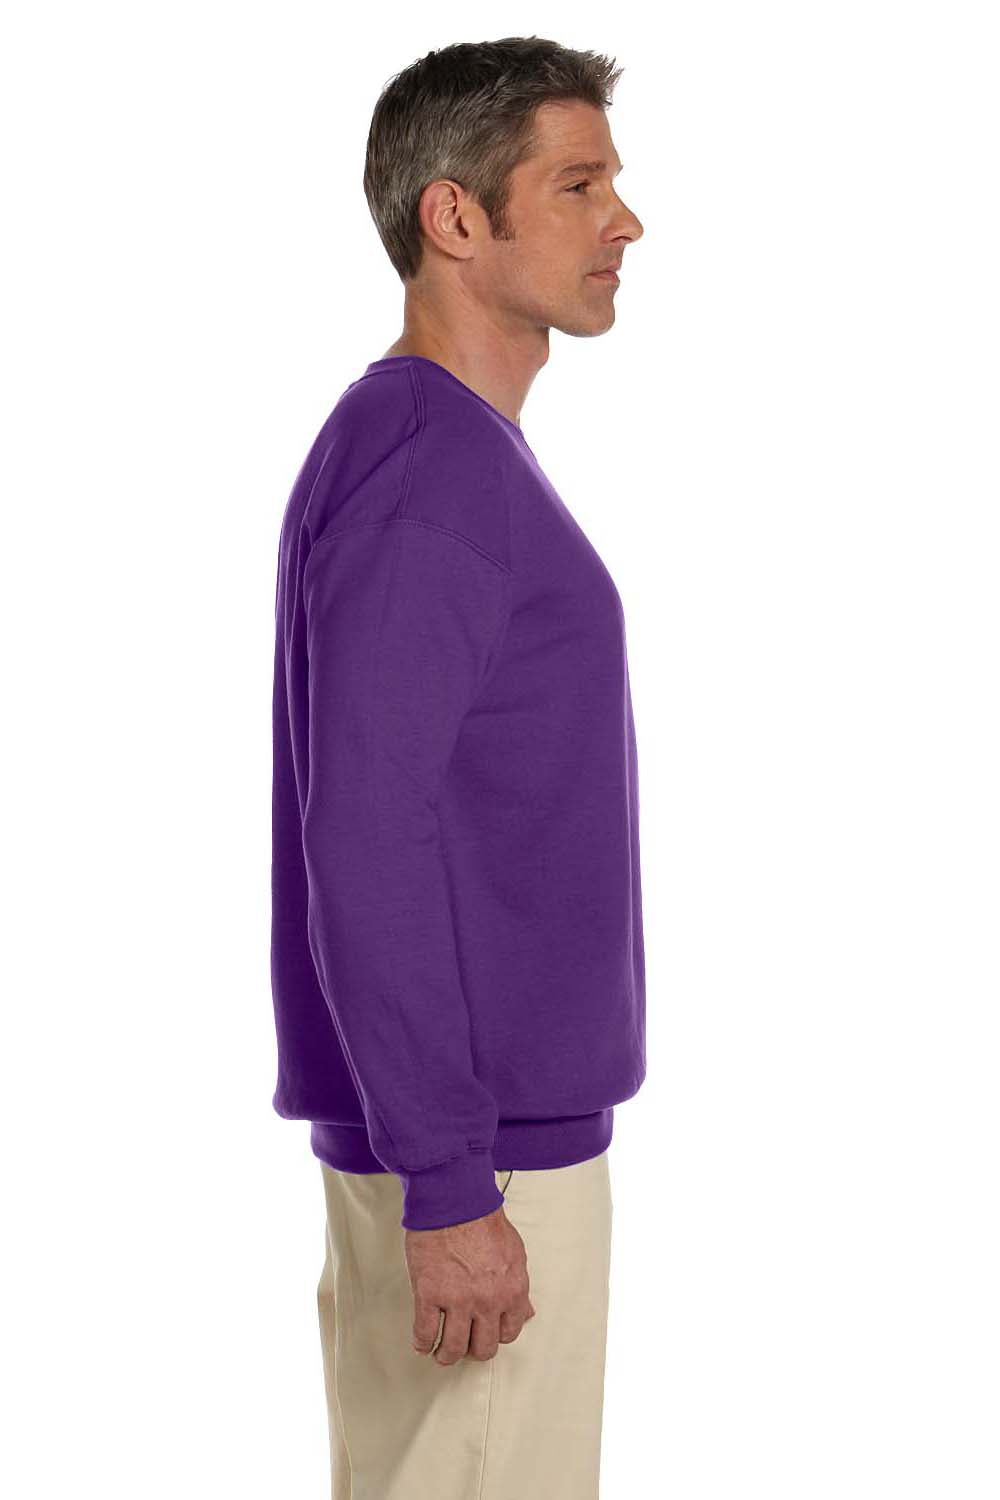 Gildan G180 Mens Fleece Crewneck Sweatshirt Purple Side